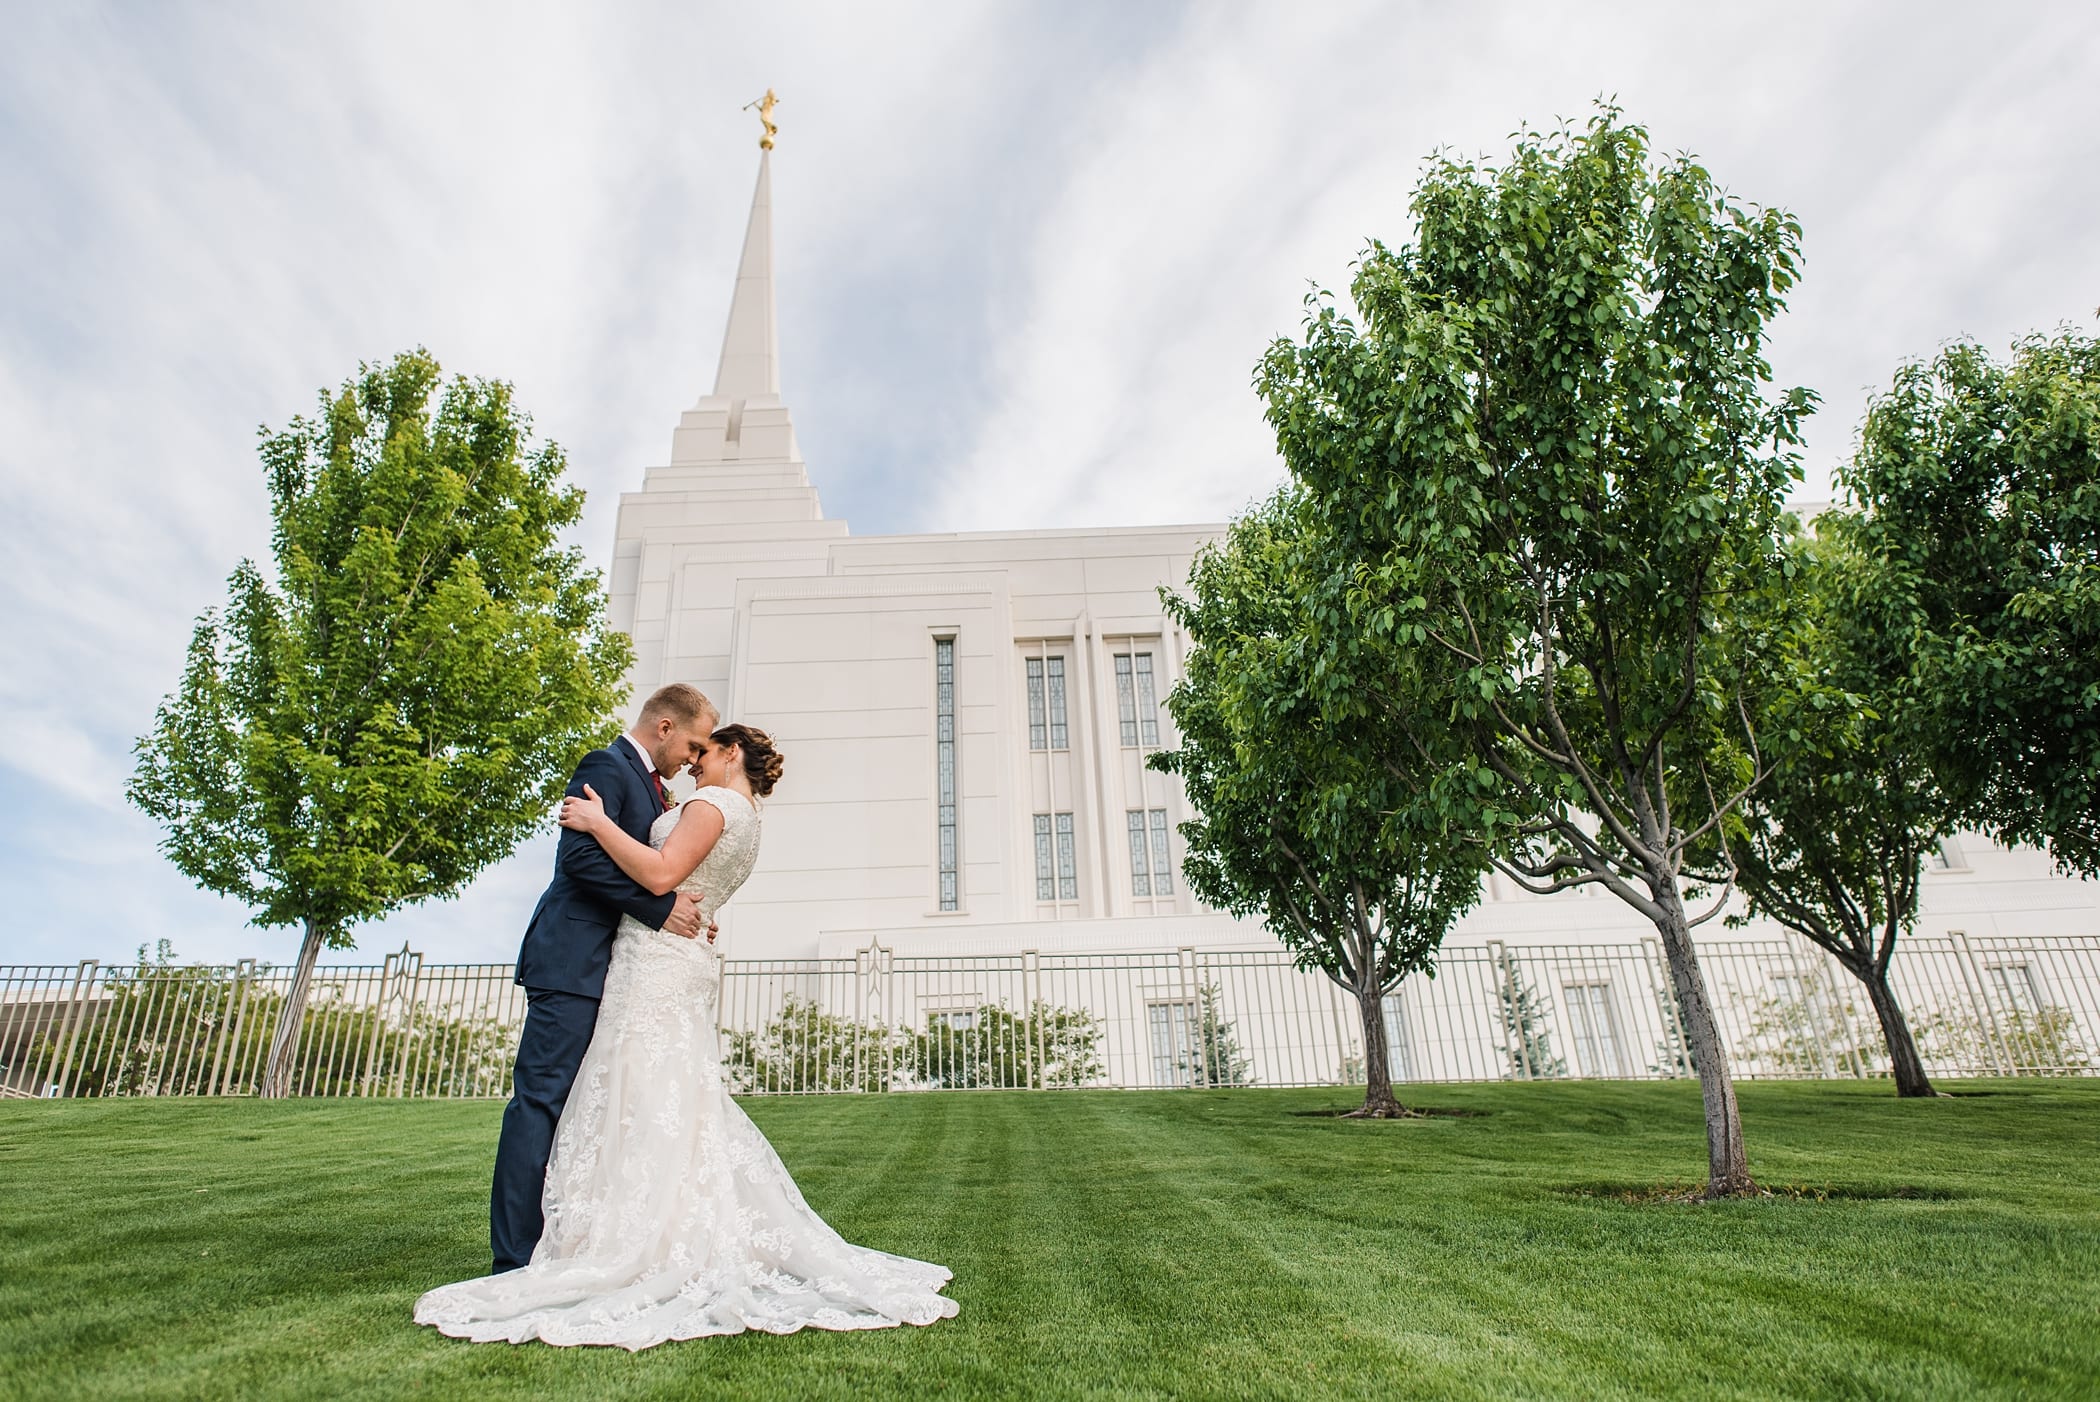 Rexburg LDS Temple Wedding | First Look | Golden hour mountain Formals | Michelle & Logan